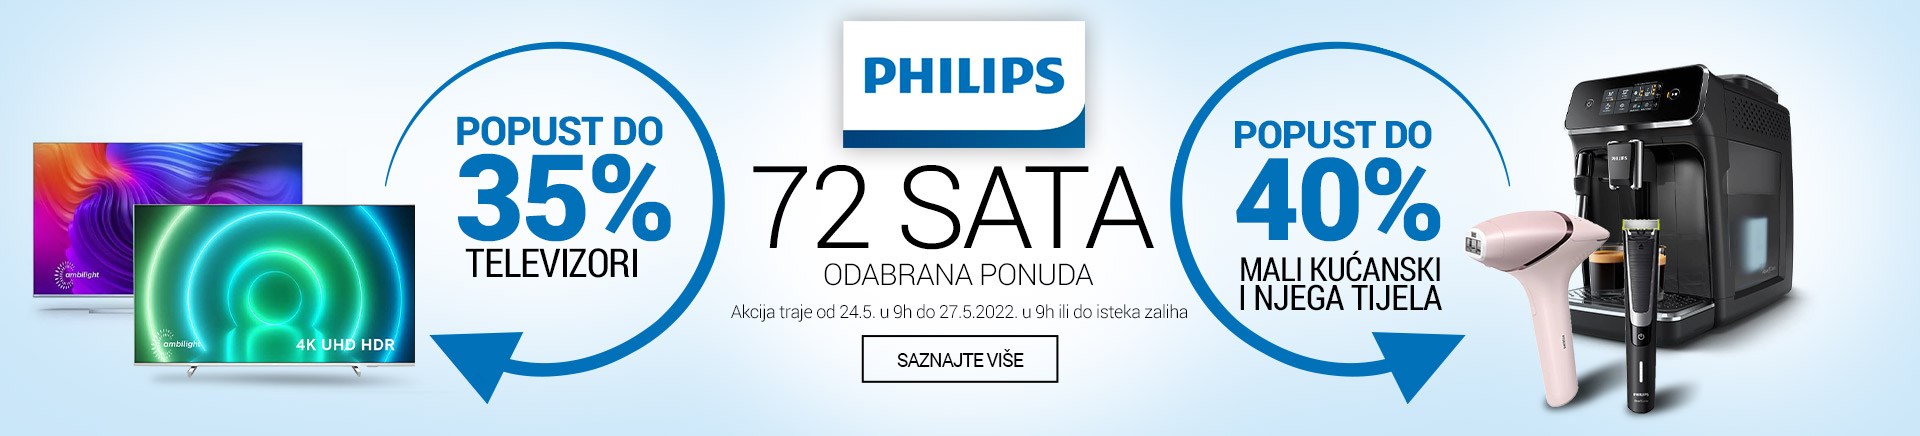 72 sata Philips aparata do 40% popusta